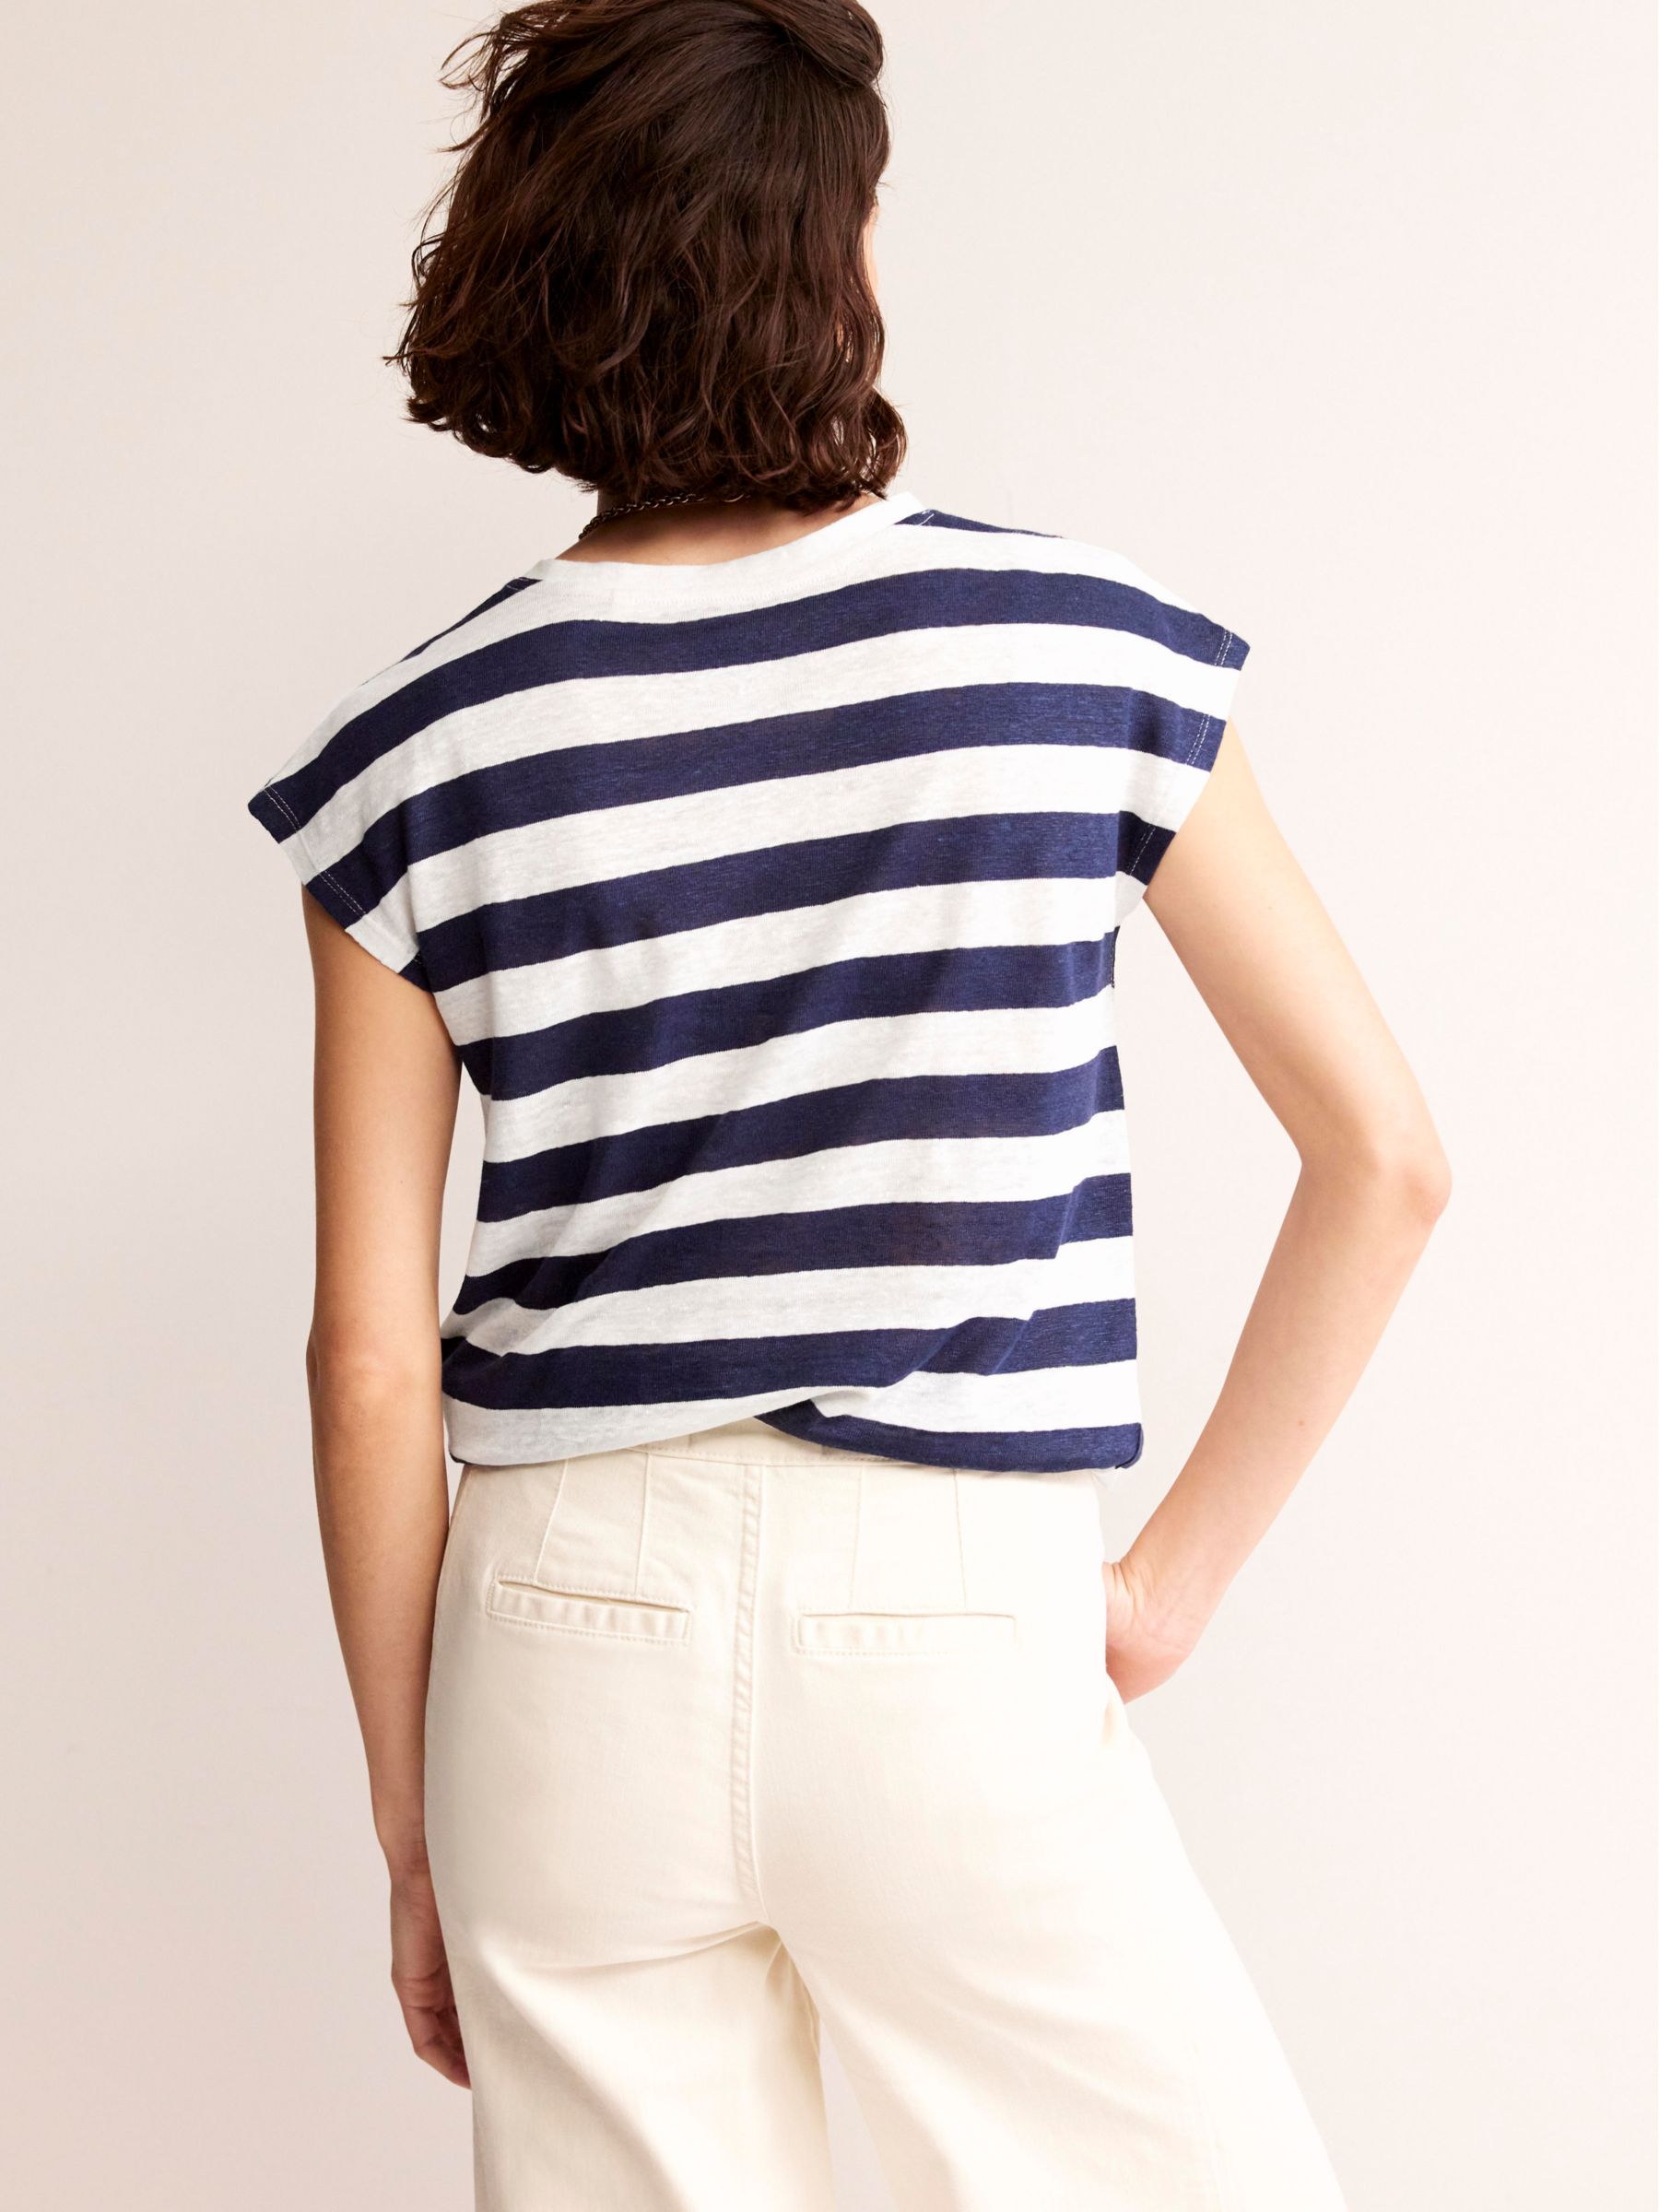 Boden Louisa Crew Neck Stripe Linen T-Shirt, Navy/Ivory, L